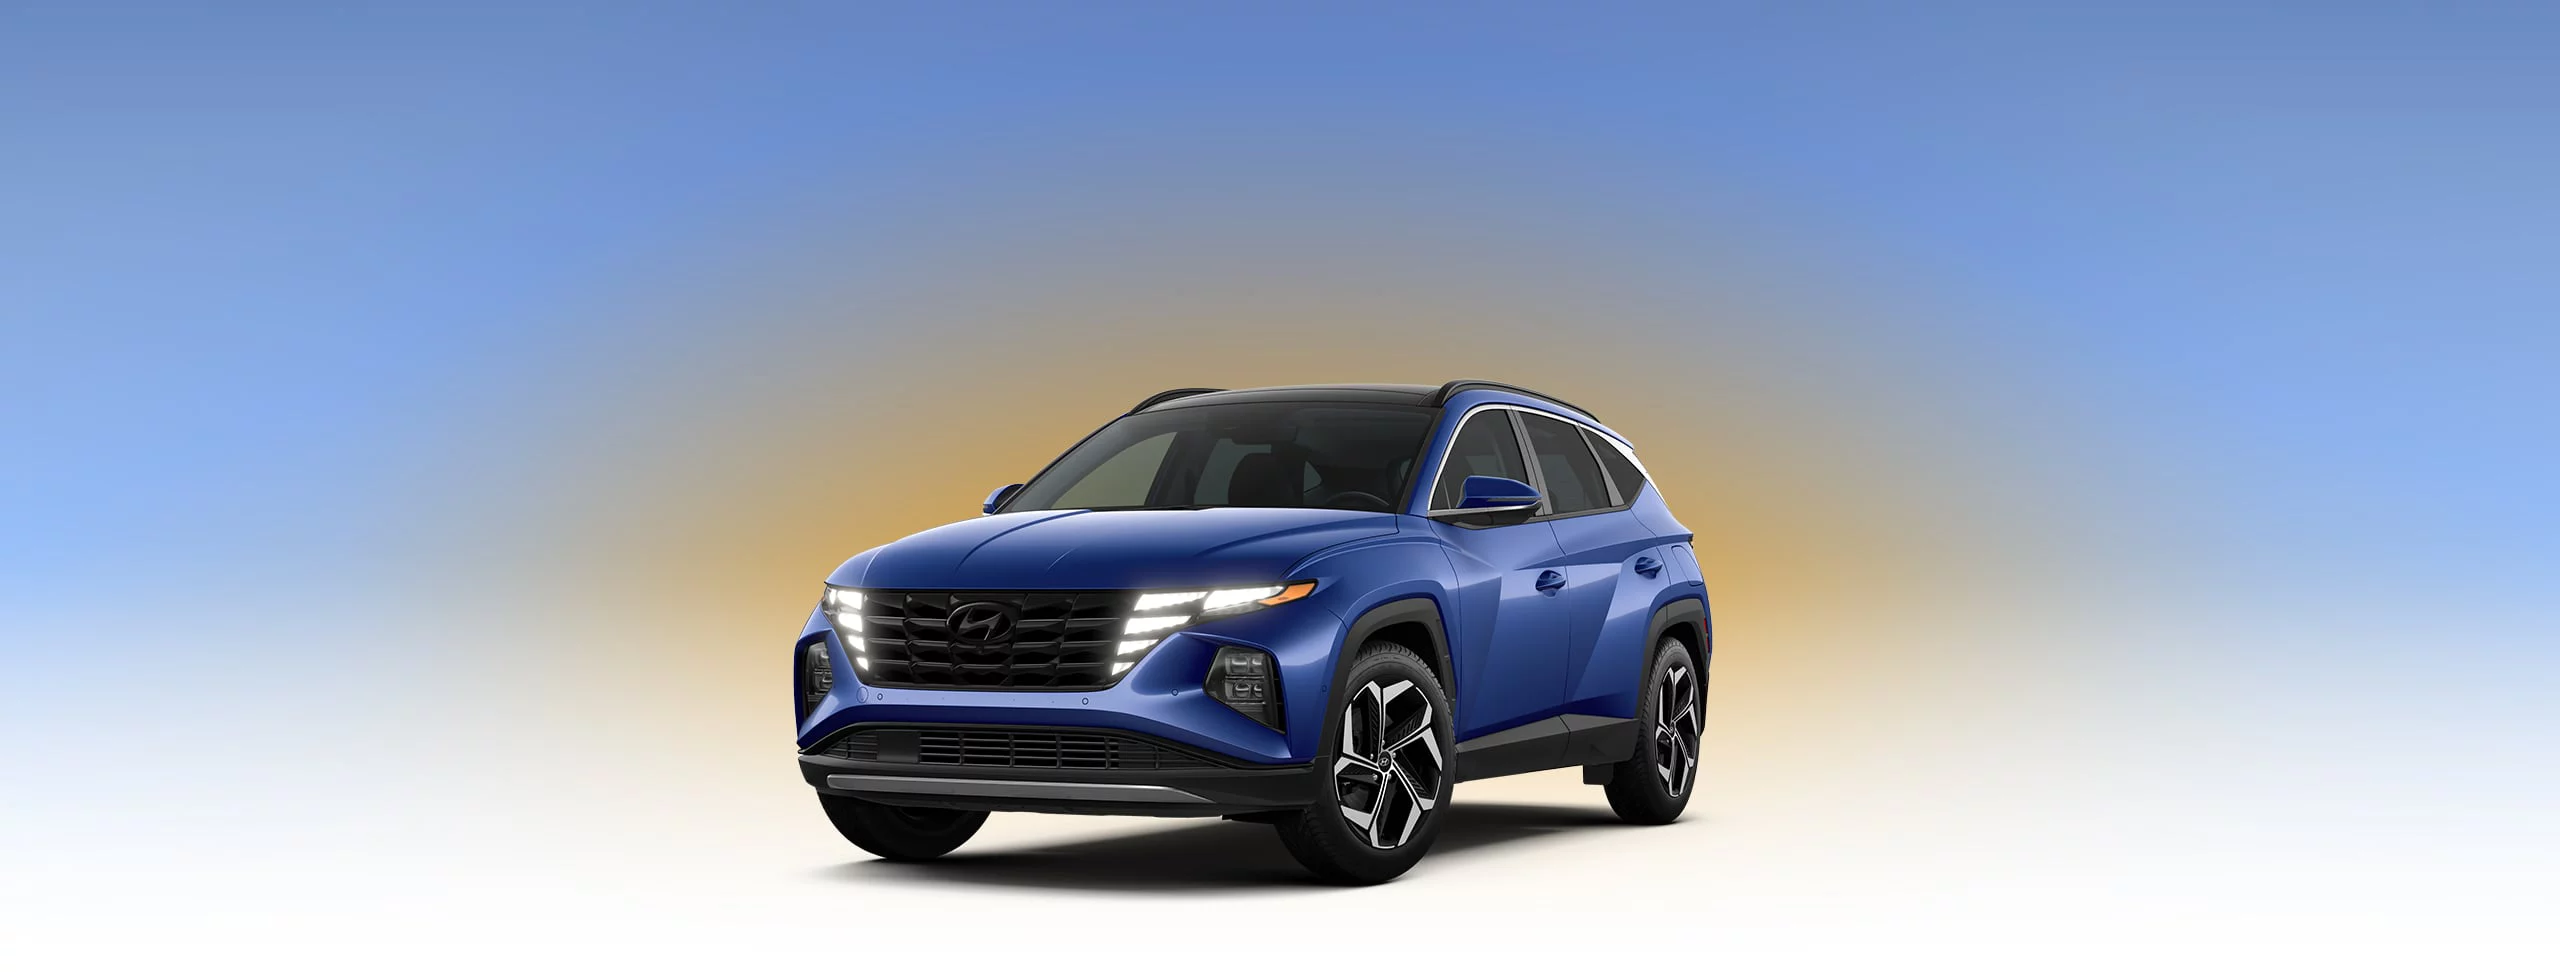 Hyundai Getaway Sales Event